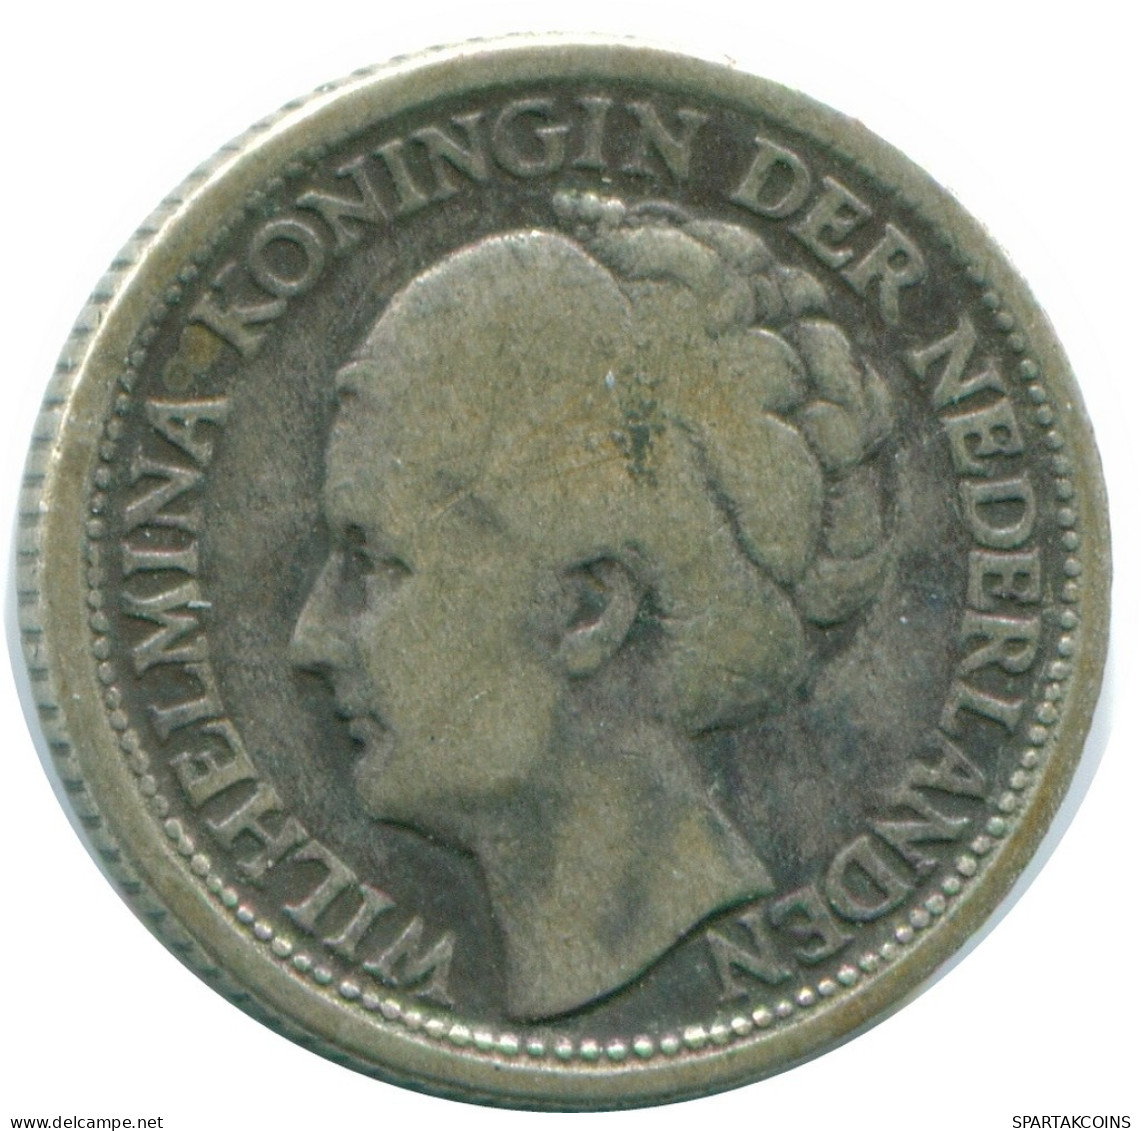 1/4 GULDEN 1944 CURACAO Netherlands SILVER Colonial Coin #NL10618.4.U.A - Curaçao